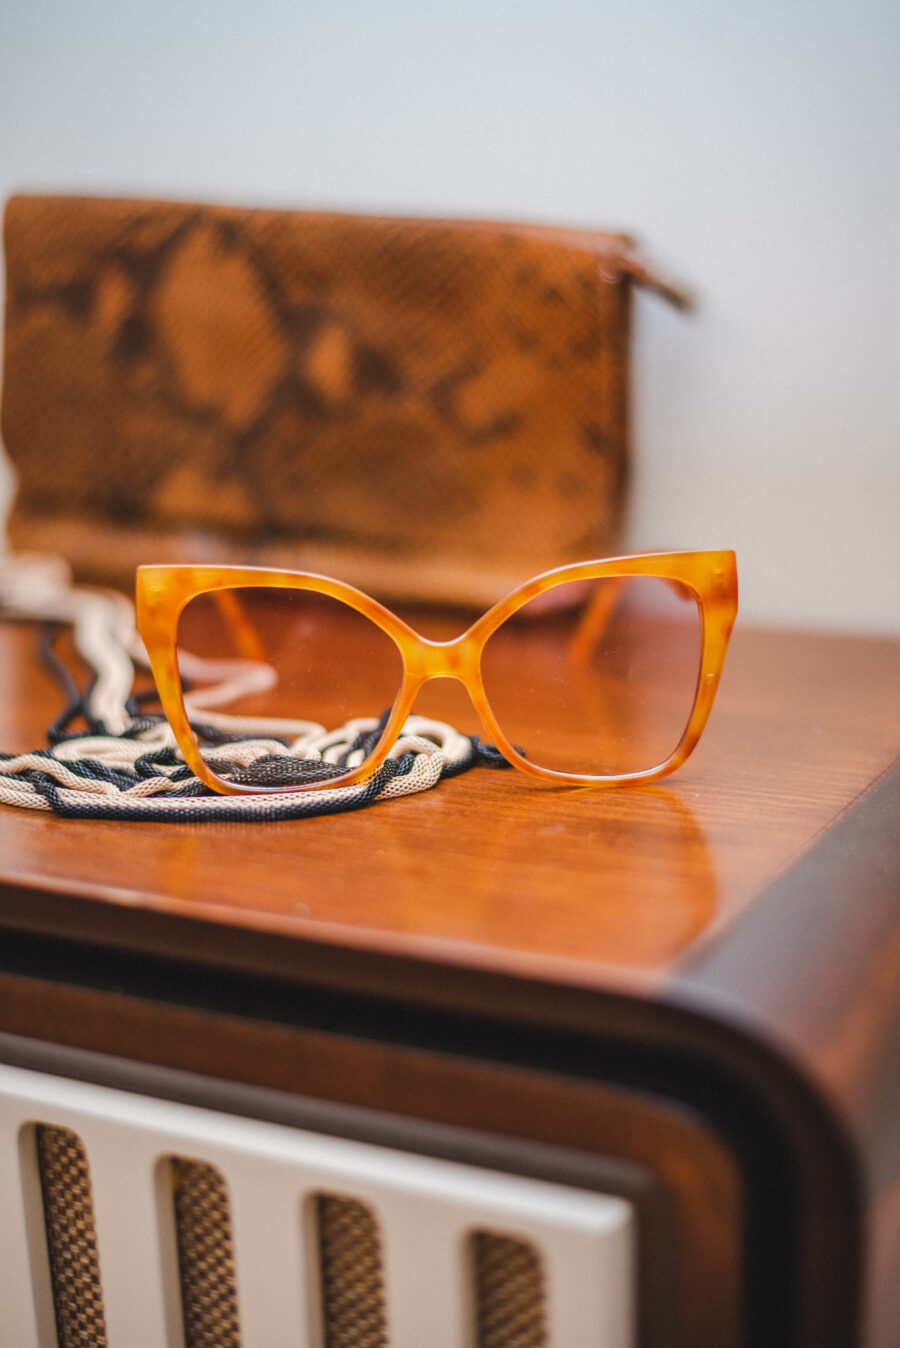 May Γυαλιά Ηλίου: Γυναικεία γυαλιά ηλίου σε σχήμα Cat-Eye. Πορτοκαλί χρώμα και μοτίβο Animal Print. Διαφανείς φακοί. 100% UV προστασία